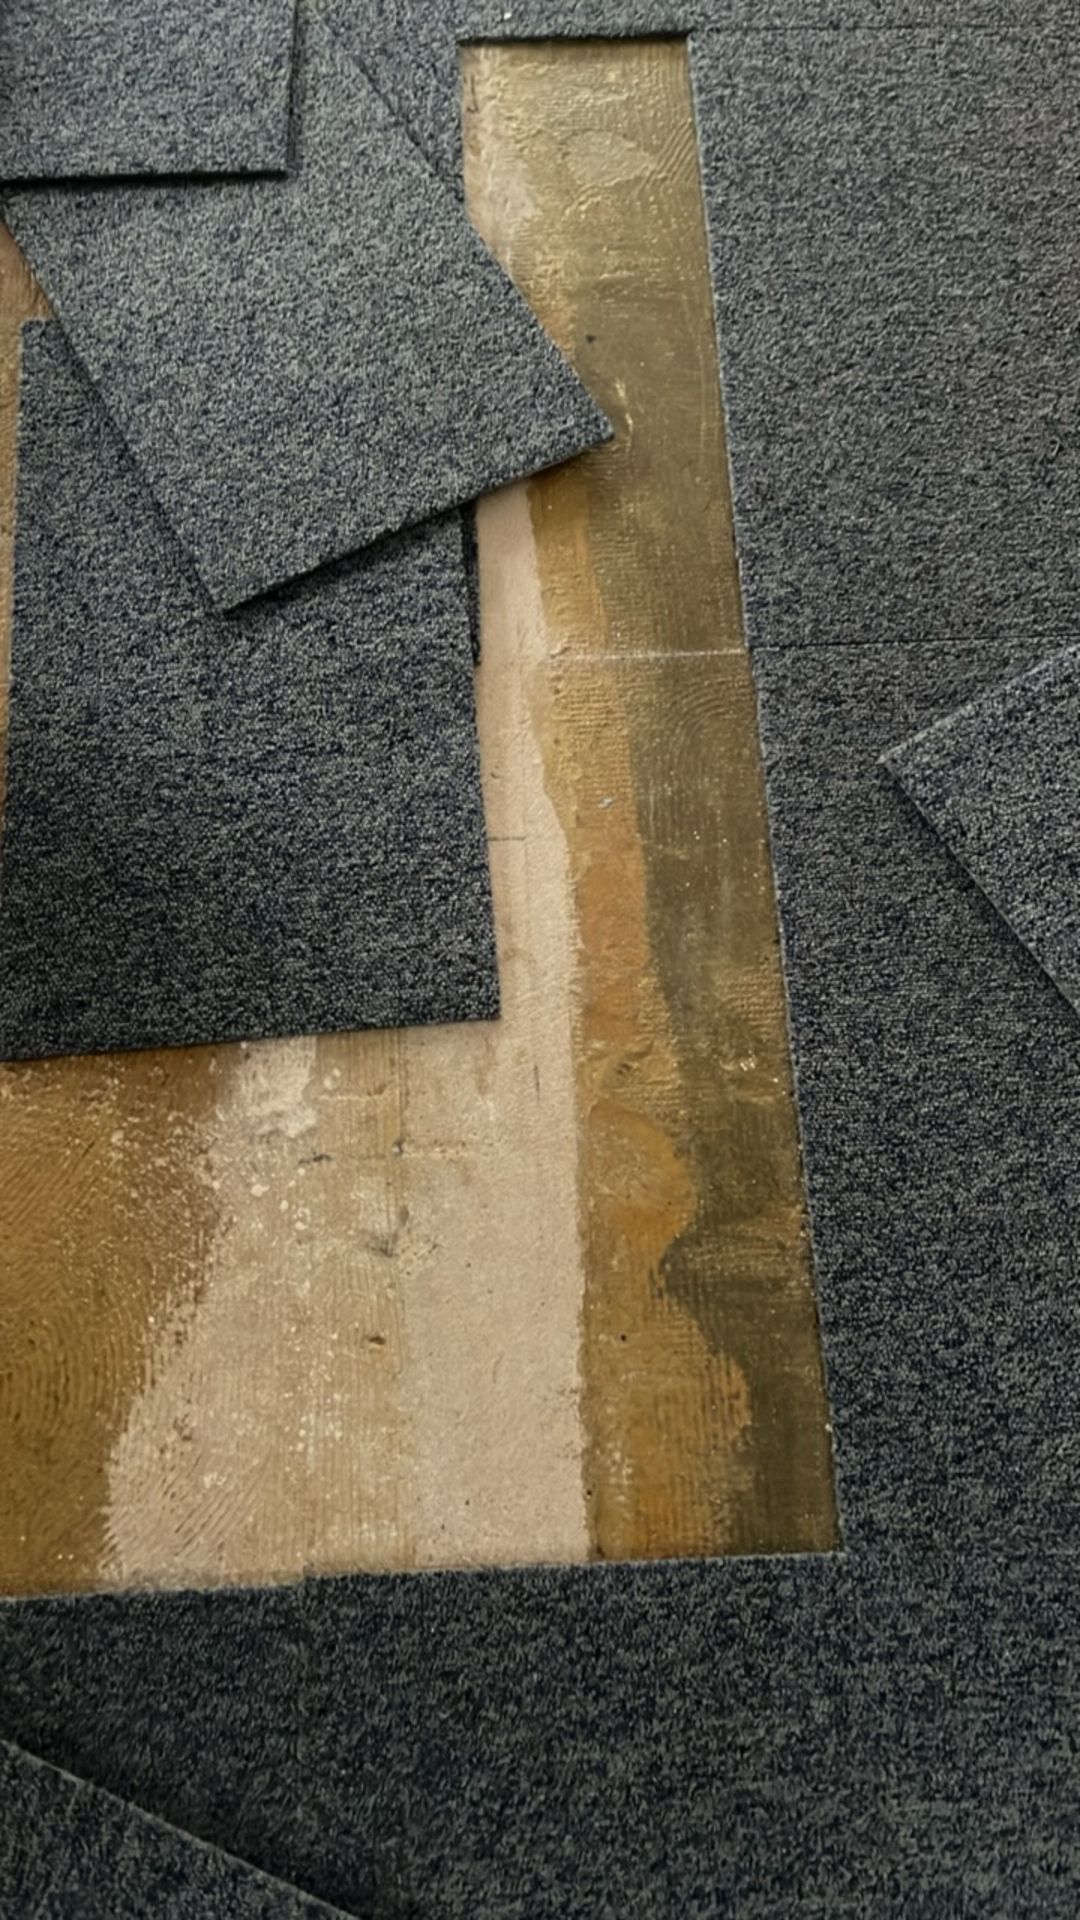 110Sq Mtr Of Blue Carpet Tiles - Image 3 of 3